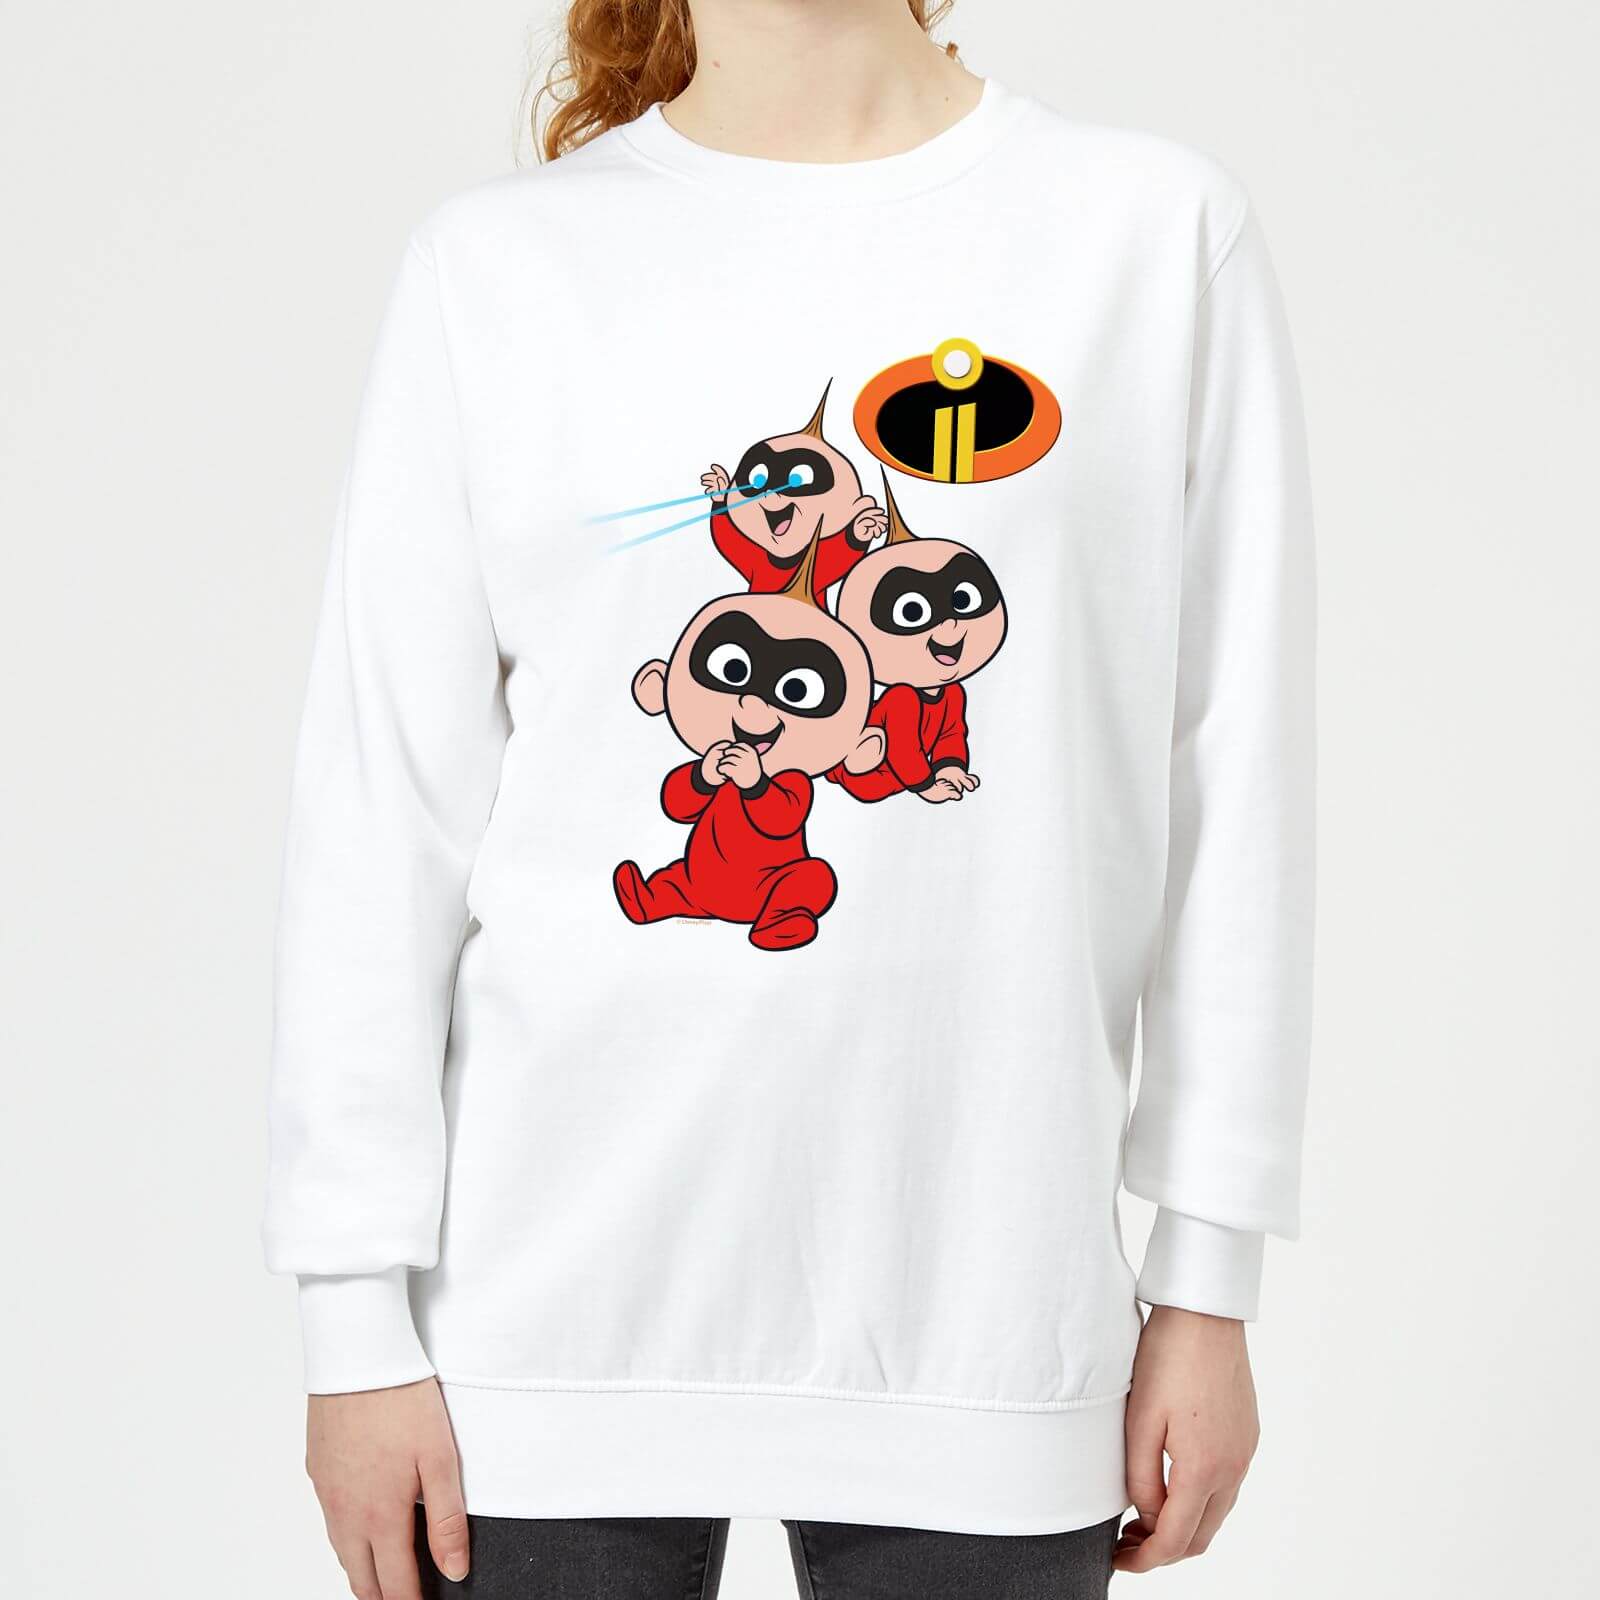 Incredibles 2 Jack Jack Poses Women's Sweatshirt - White - M